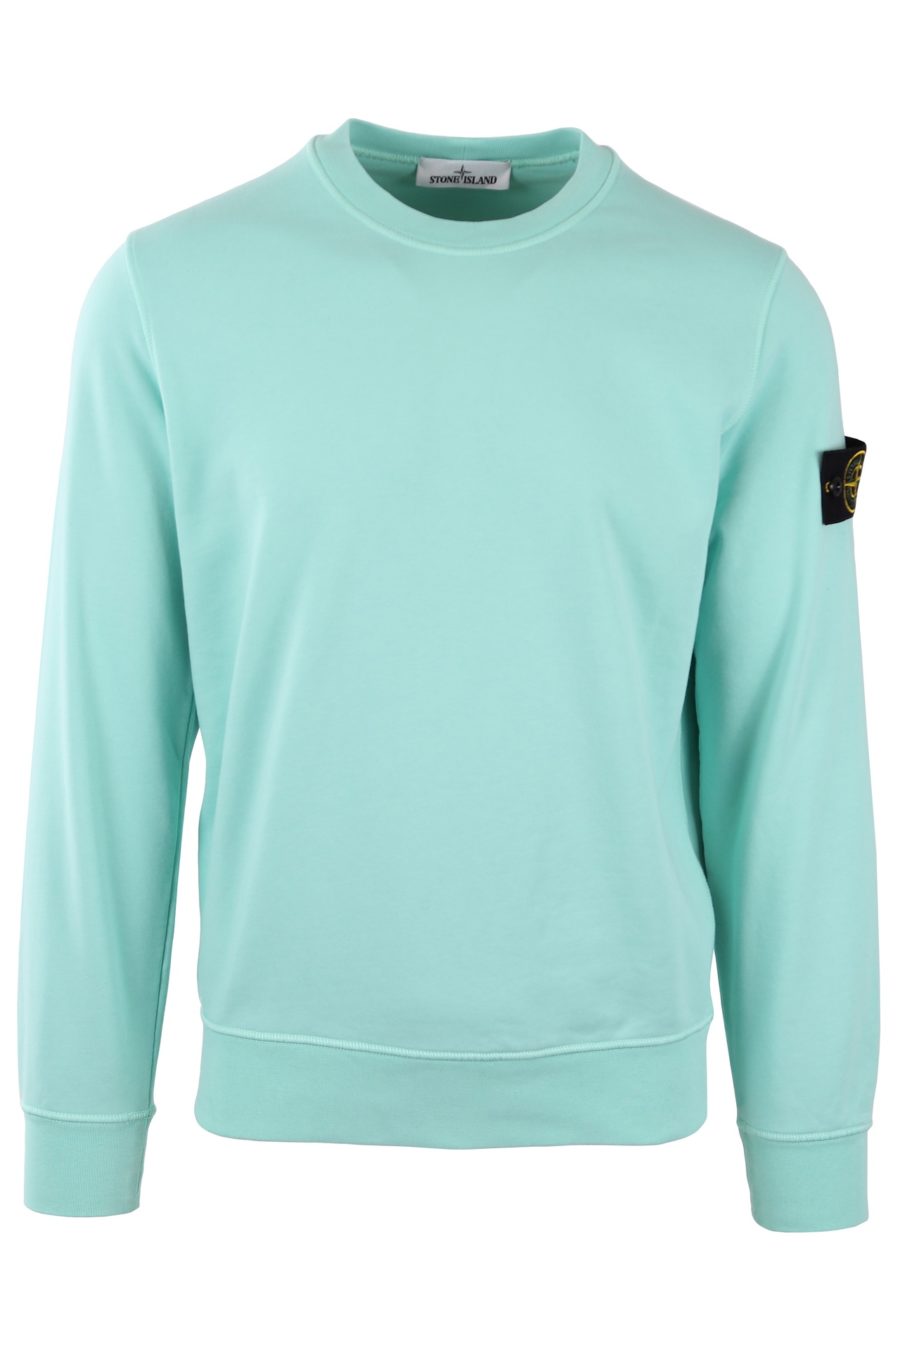 Sweatshirt Stone Island mint with patch - b8c502fe867dcacba4f31bf8e672f5049febfa78